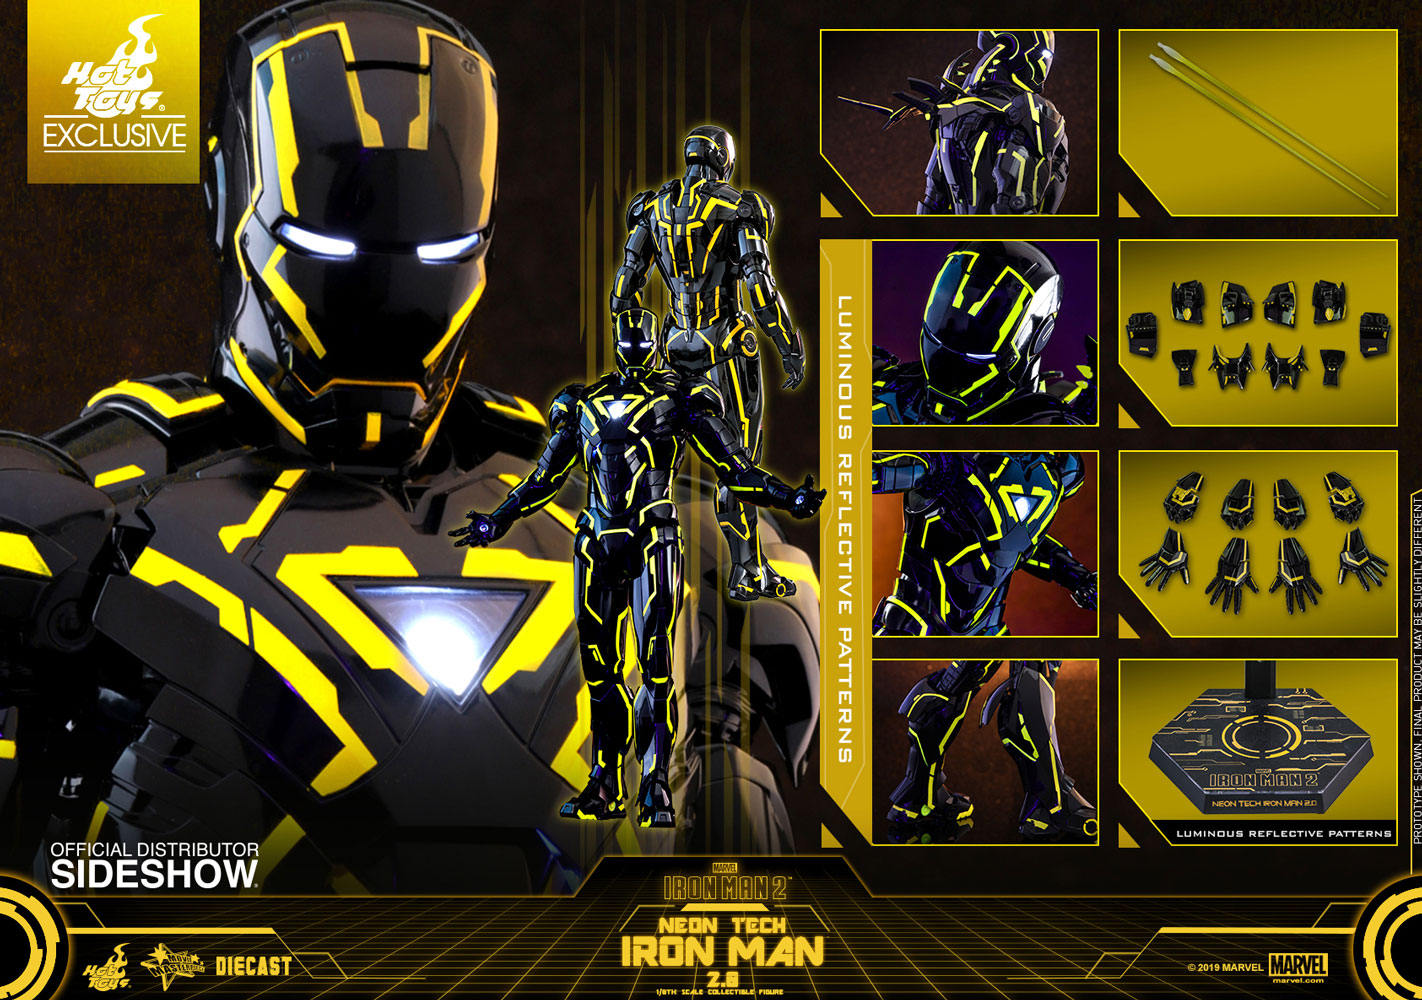 Neon Tech Iron Man 2.0 Sixth Scale Figure